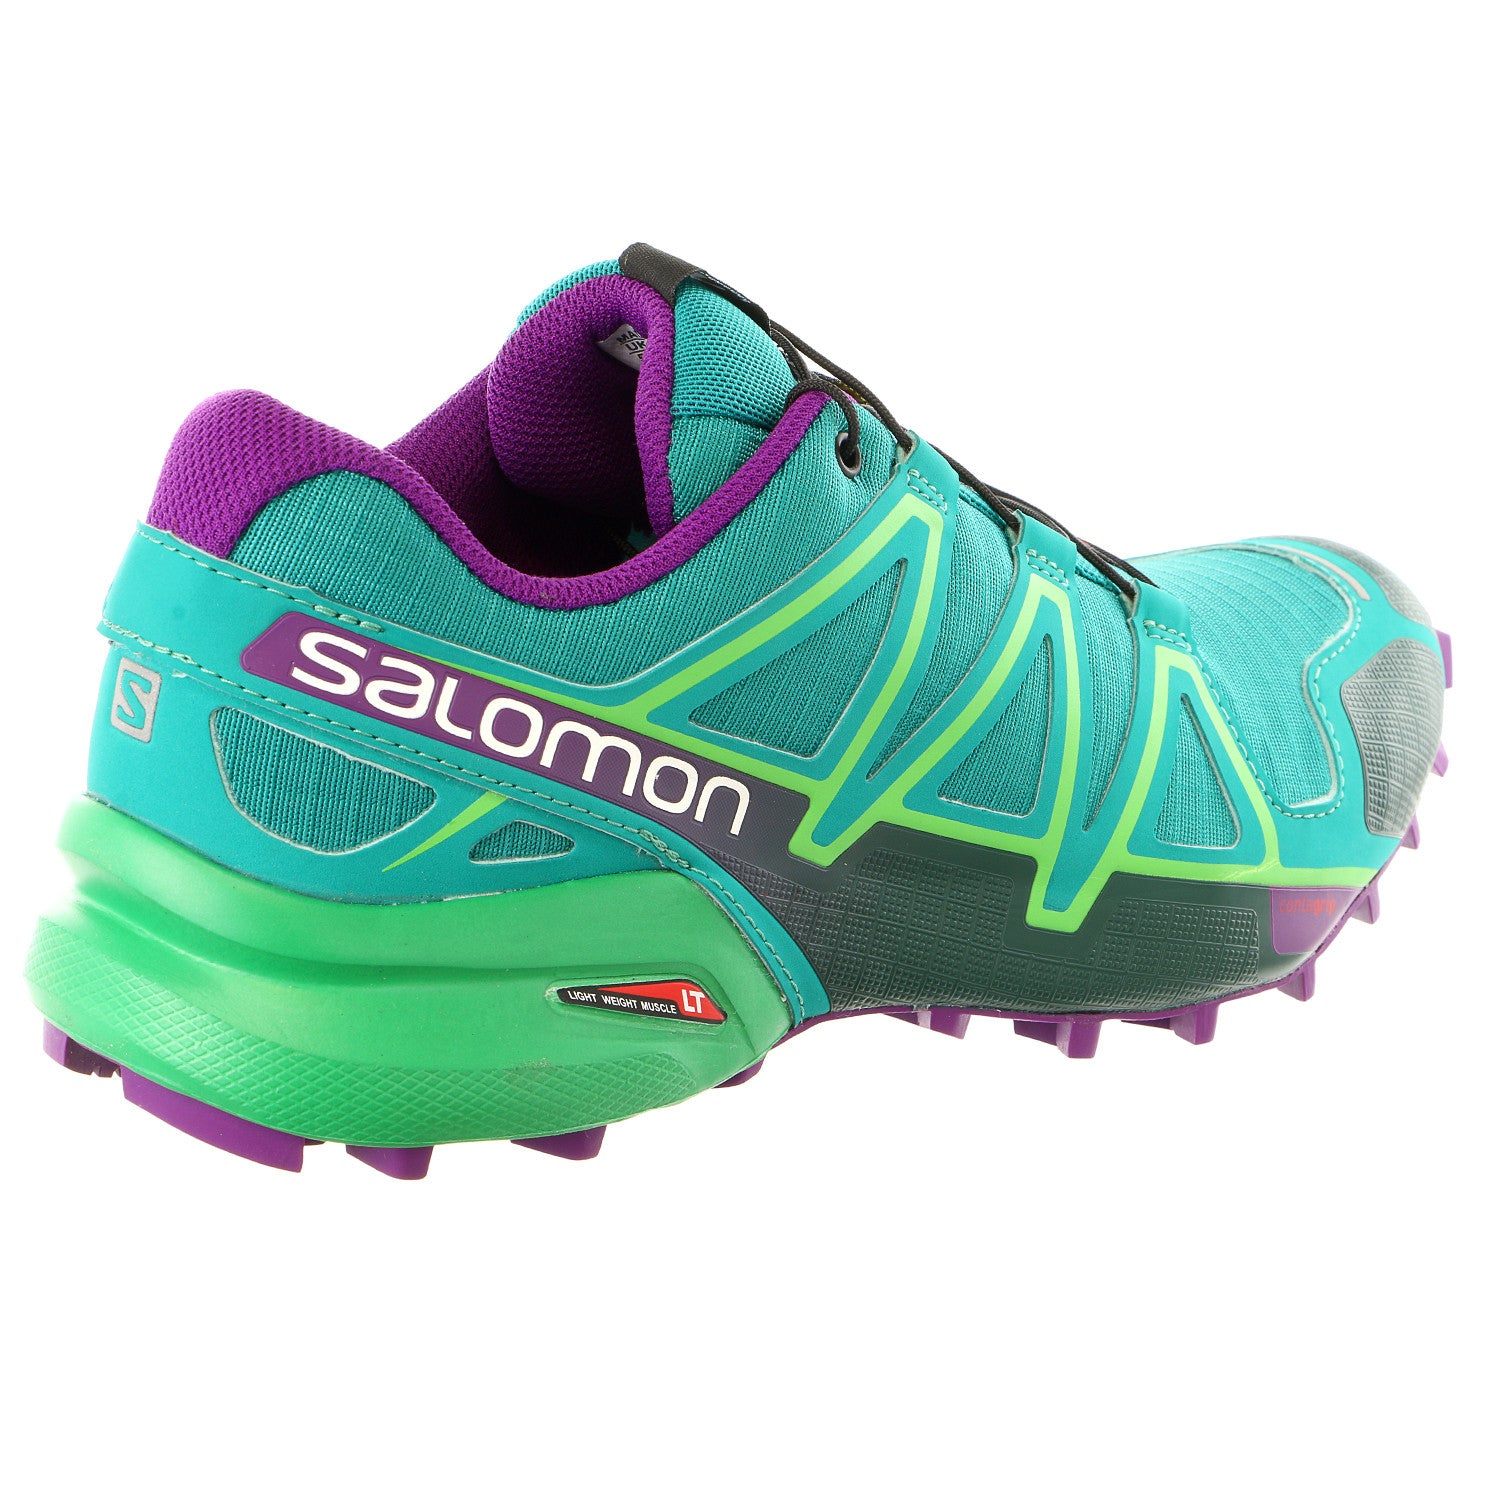 Salomon Speedcross 4 Runners - Women's - Shoplifestyle